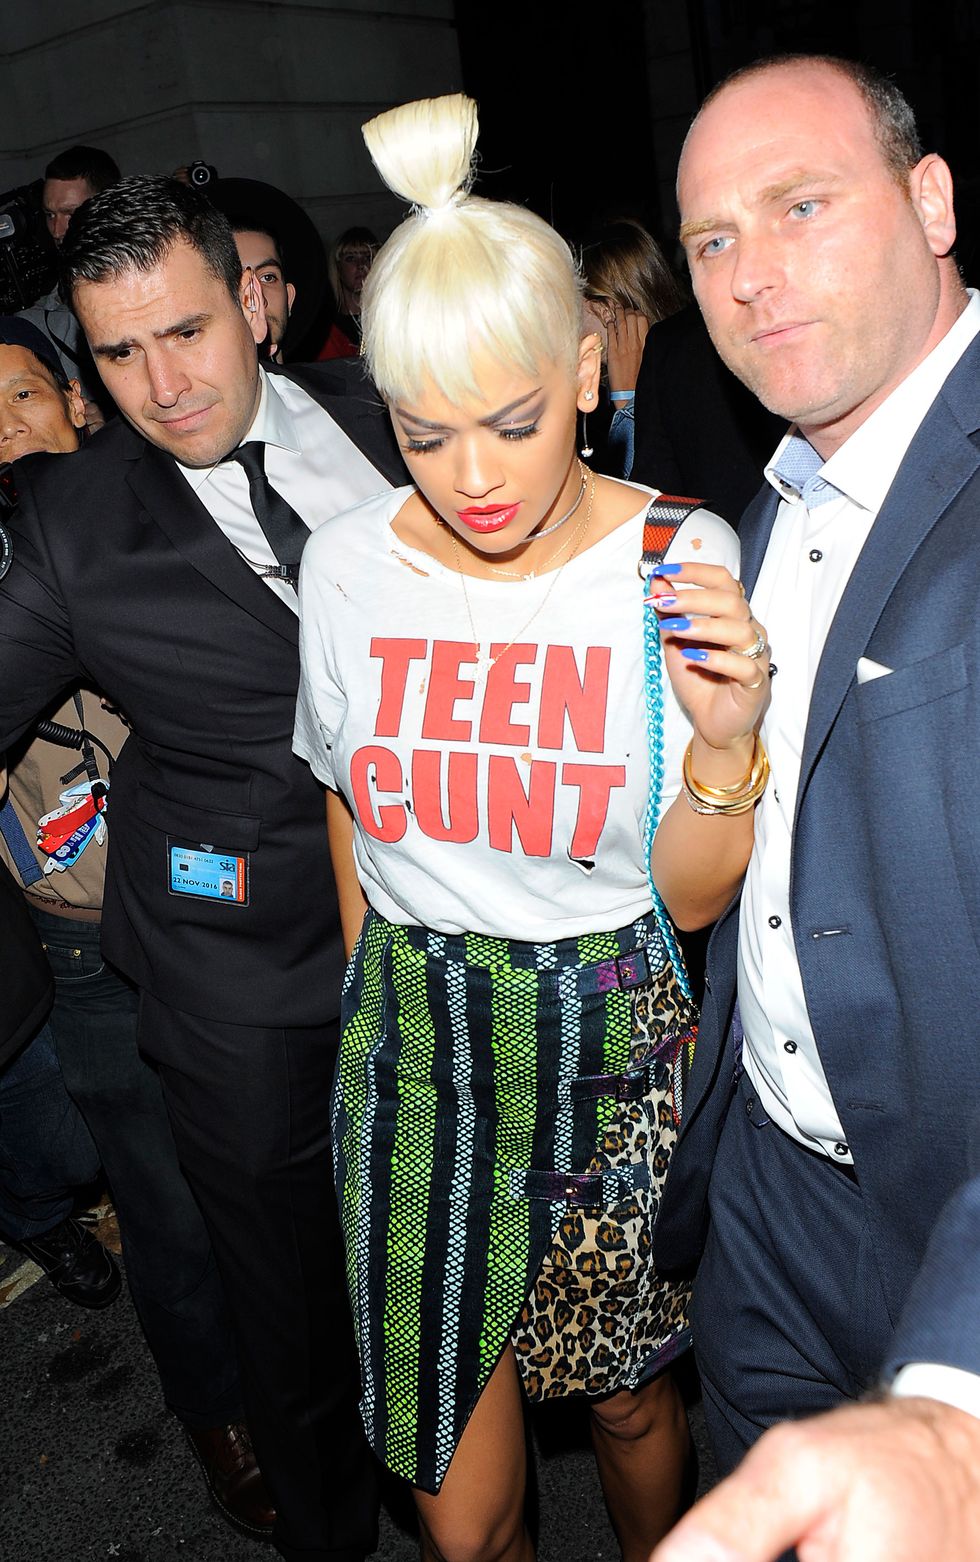 Rita Ora wears a bold 'teen cunt' top to London Fashion Week